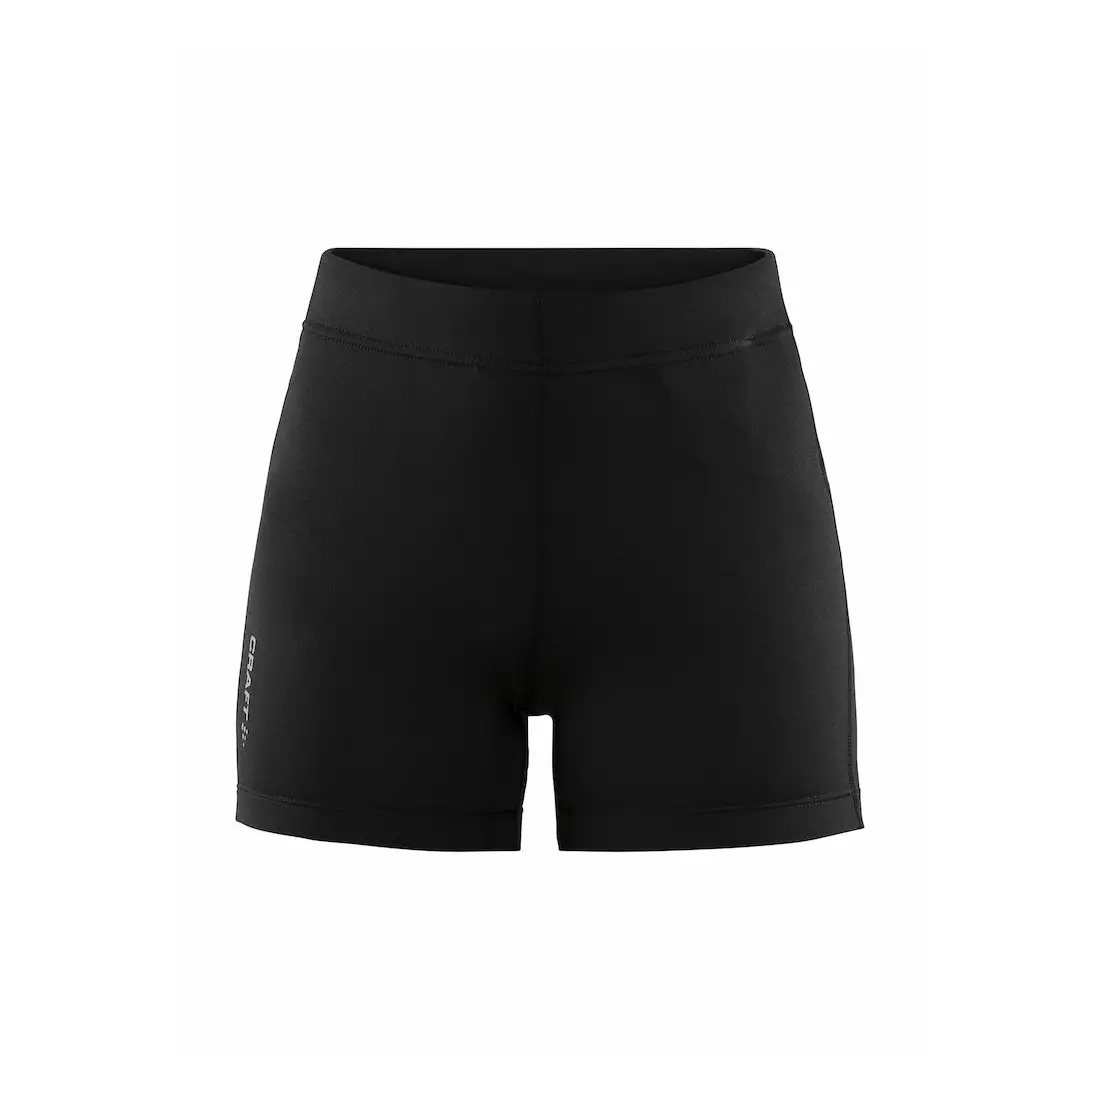 CRAFT EAZE women's shorts, black, 1907058